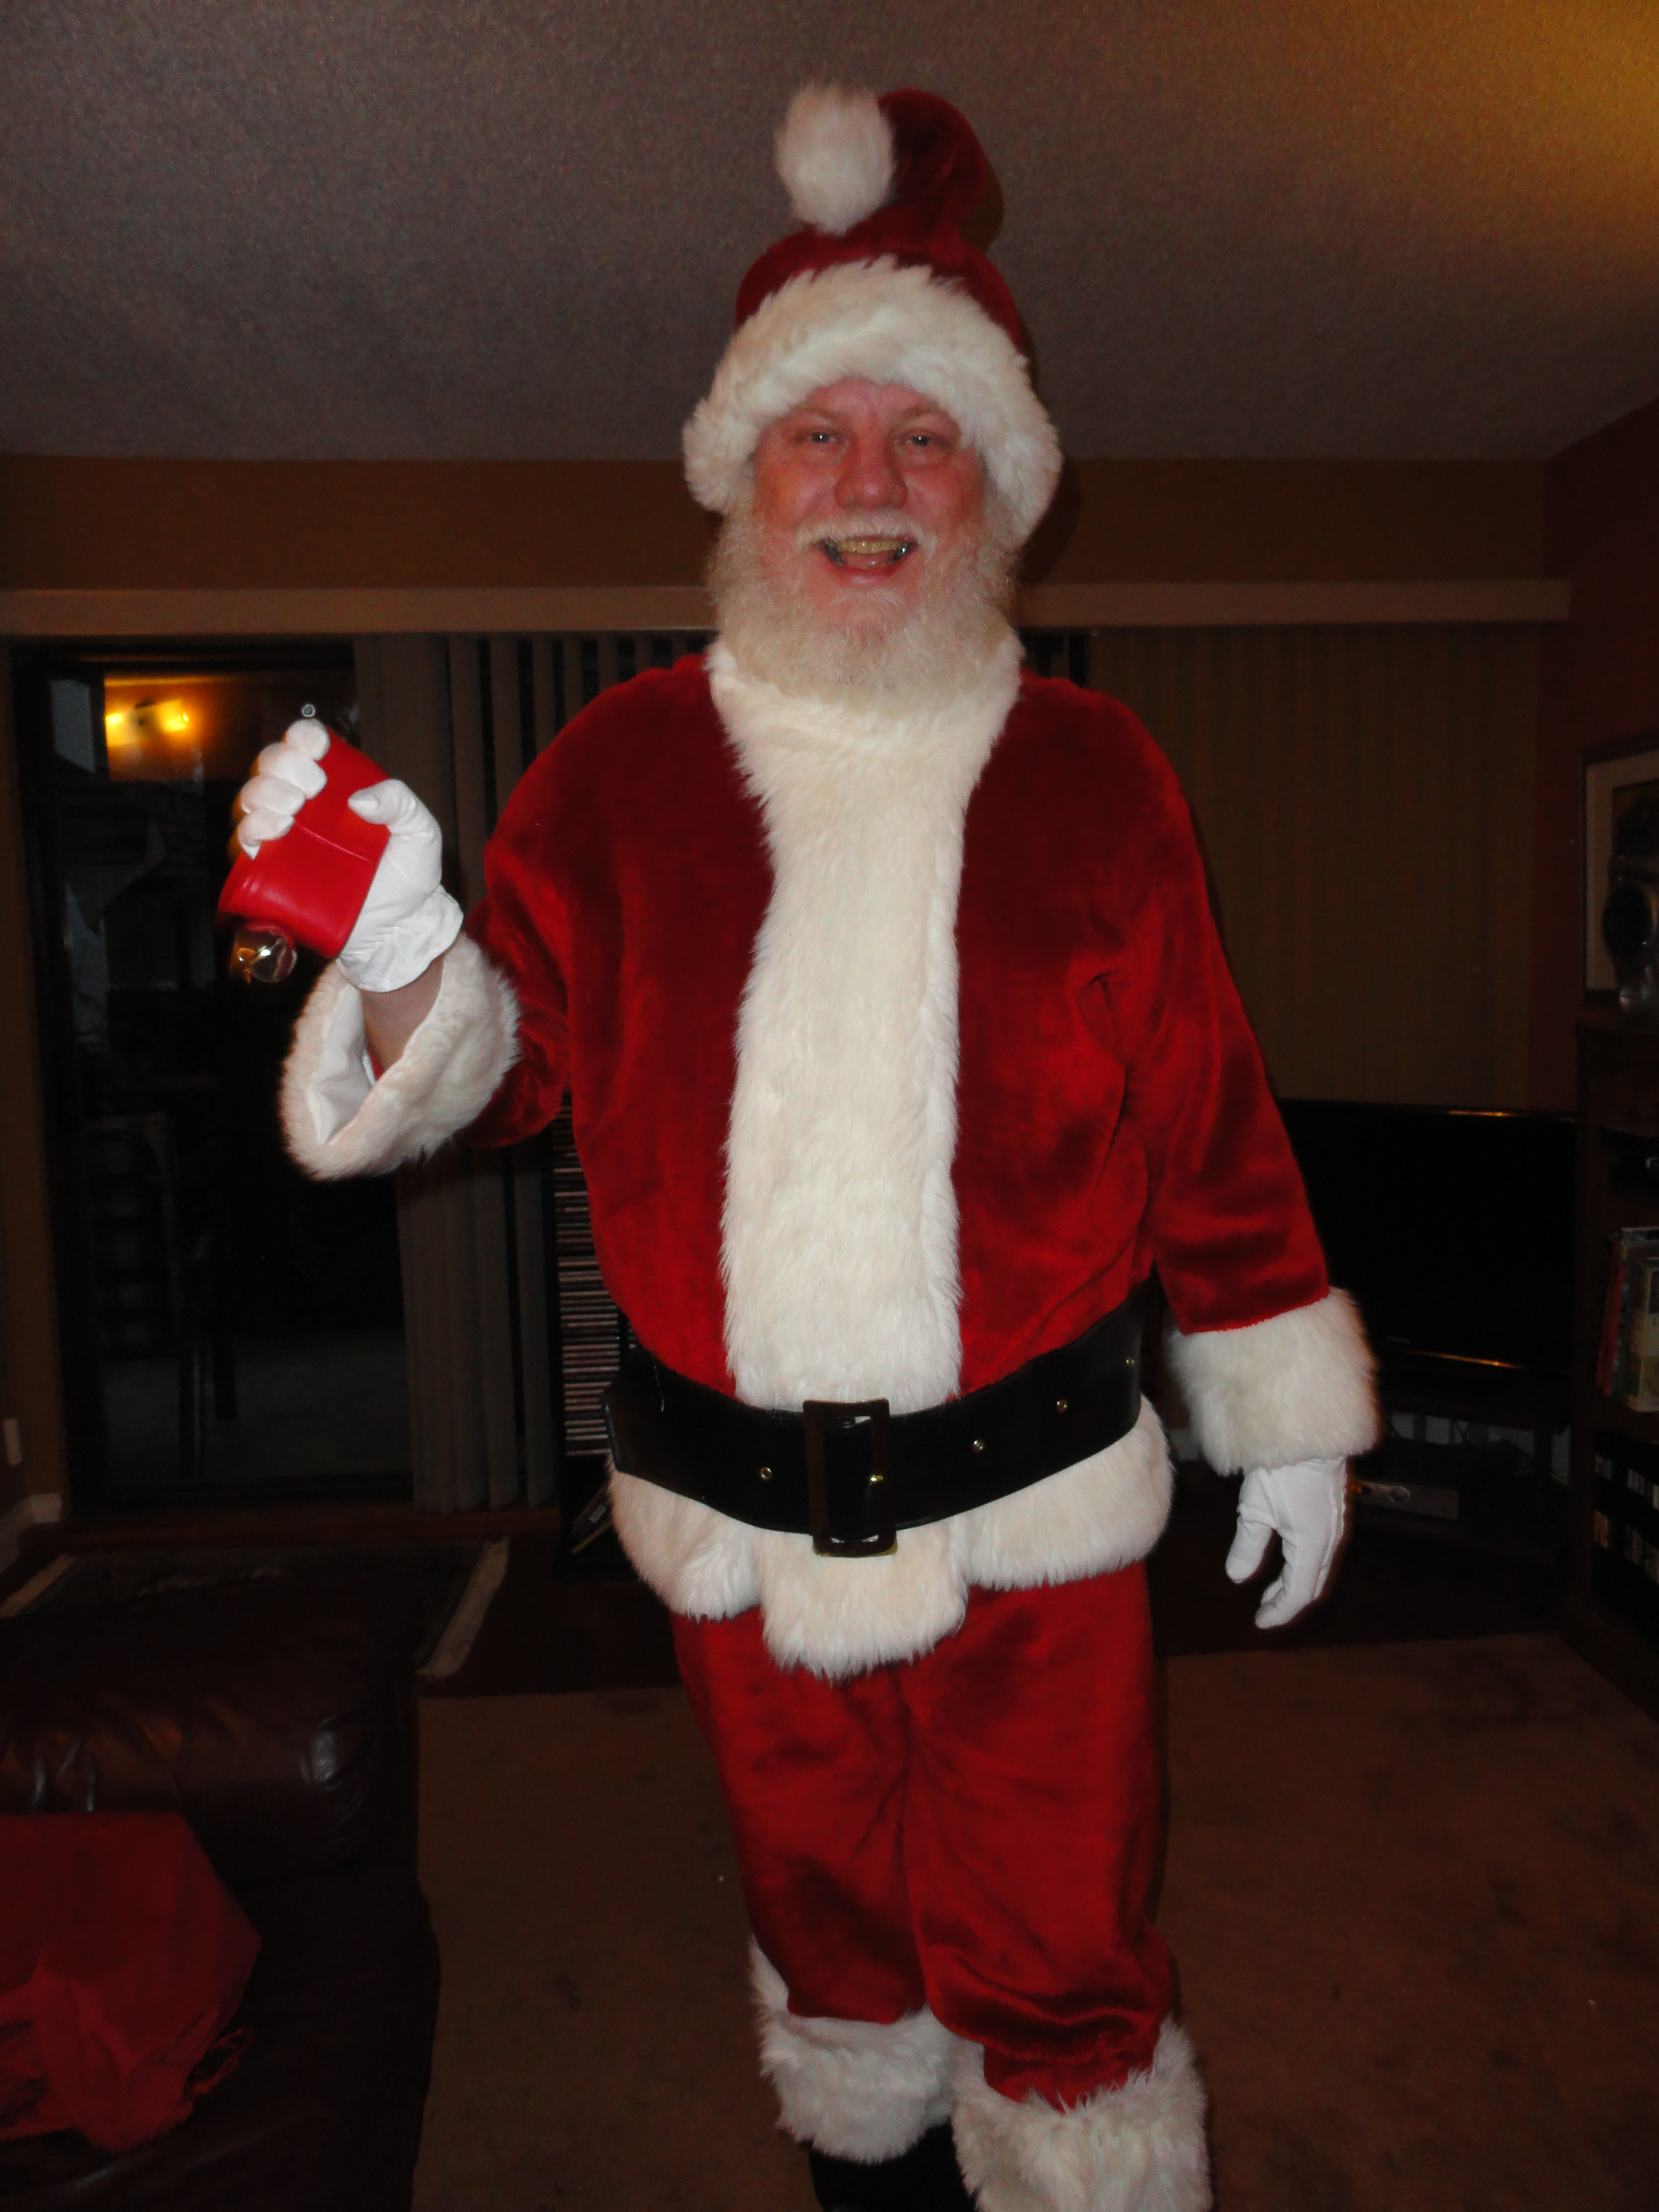 Me as Santa Claus Christmas 2010.